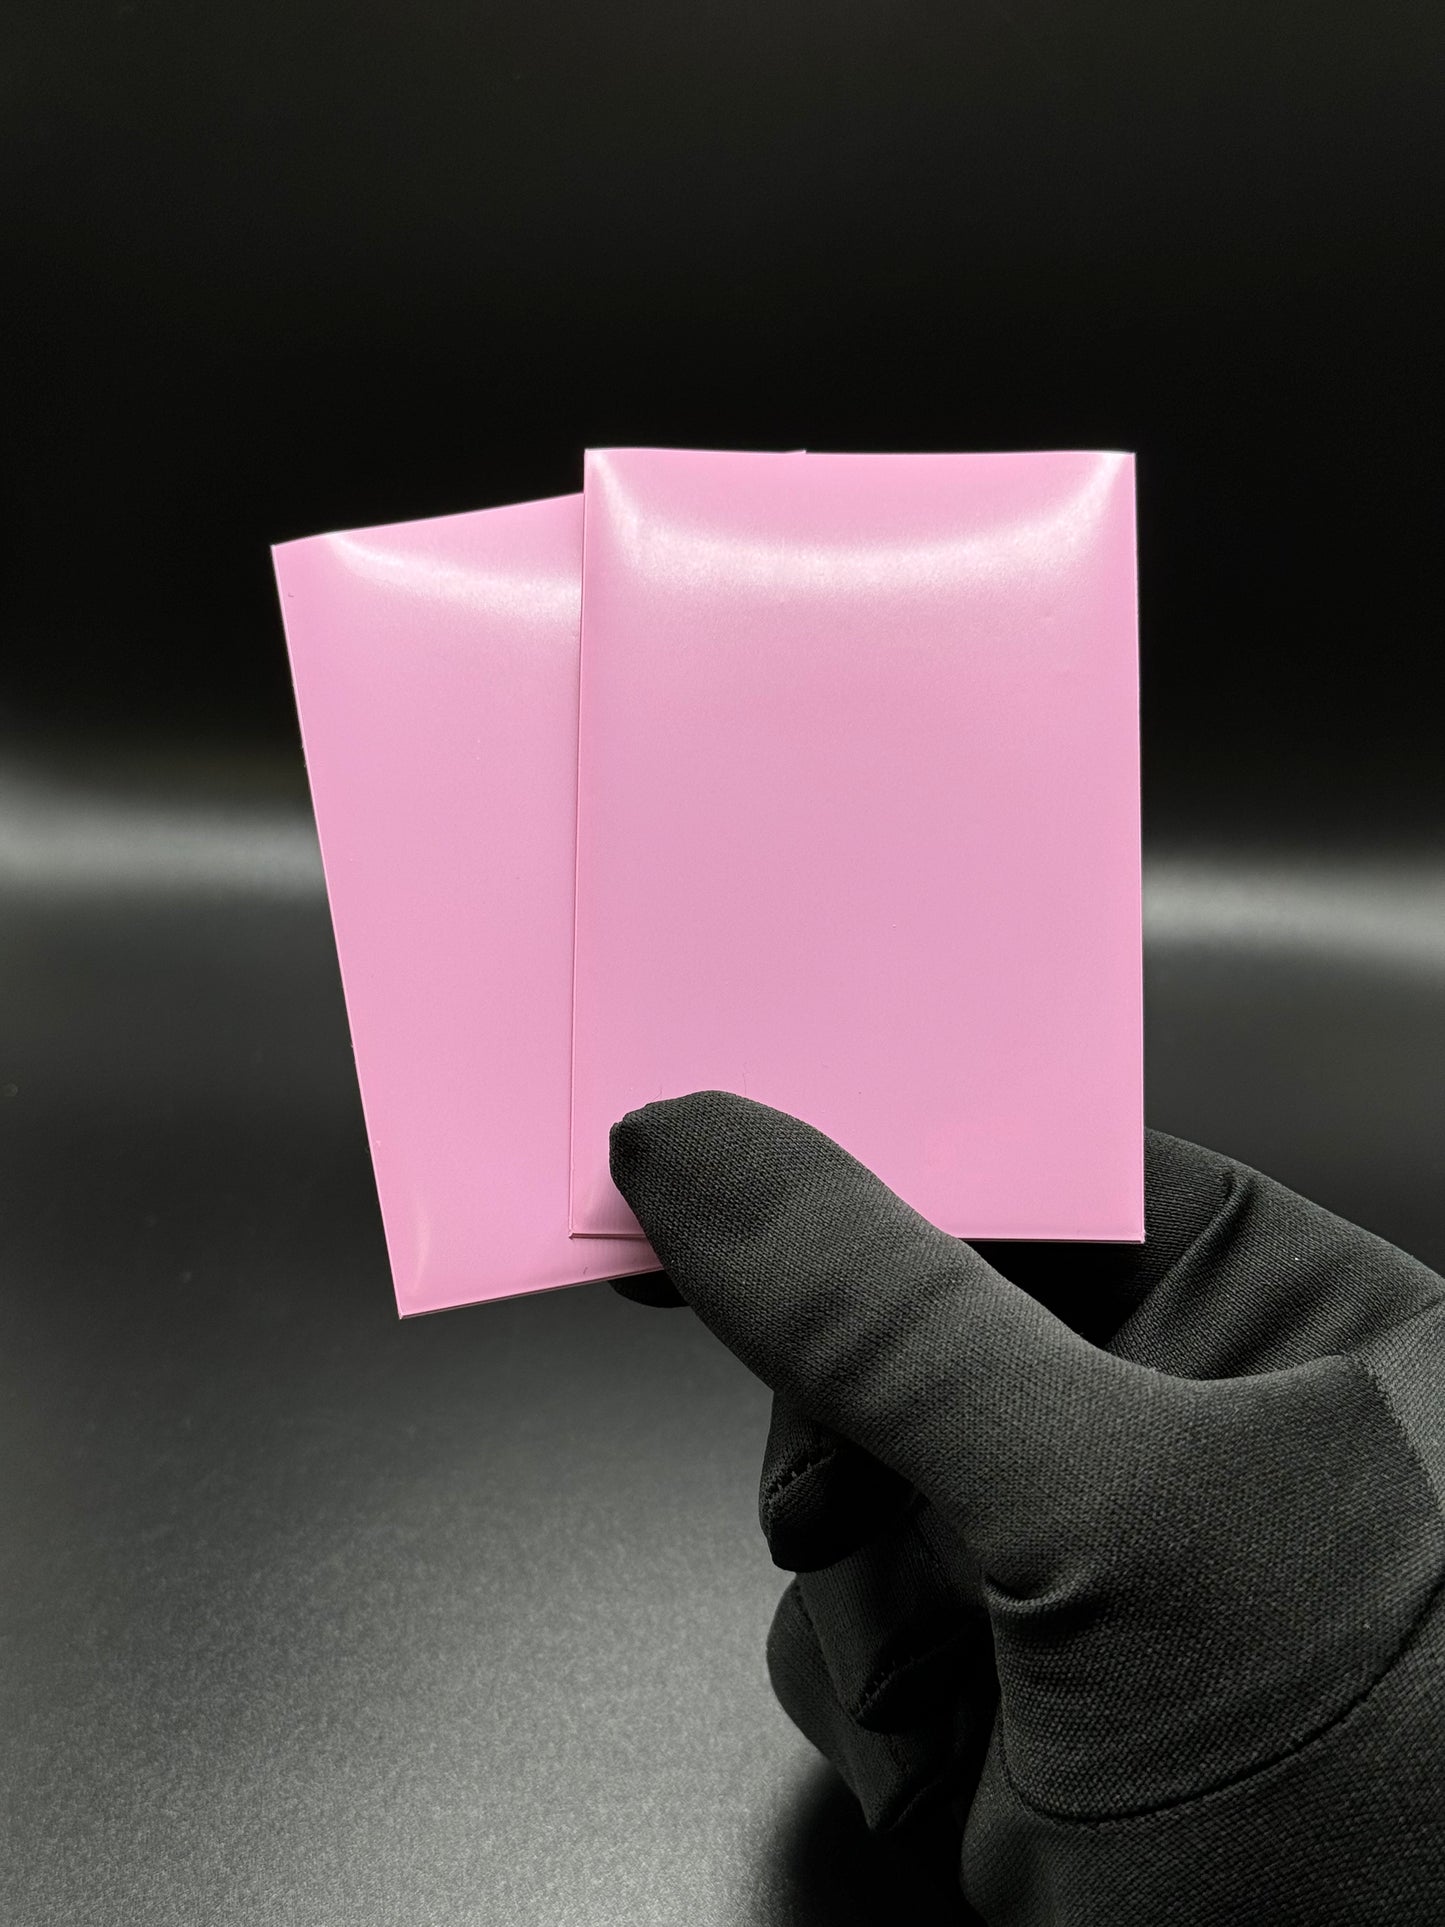 ELITE SERIES - Glossy Pink Color Sleeves (70PCS)